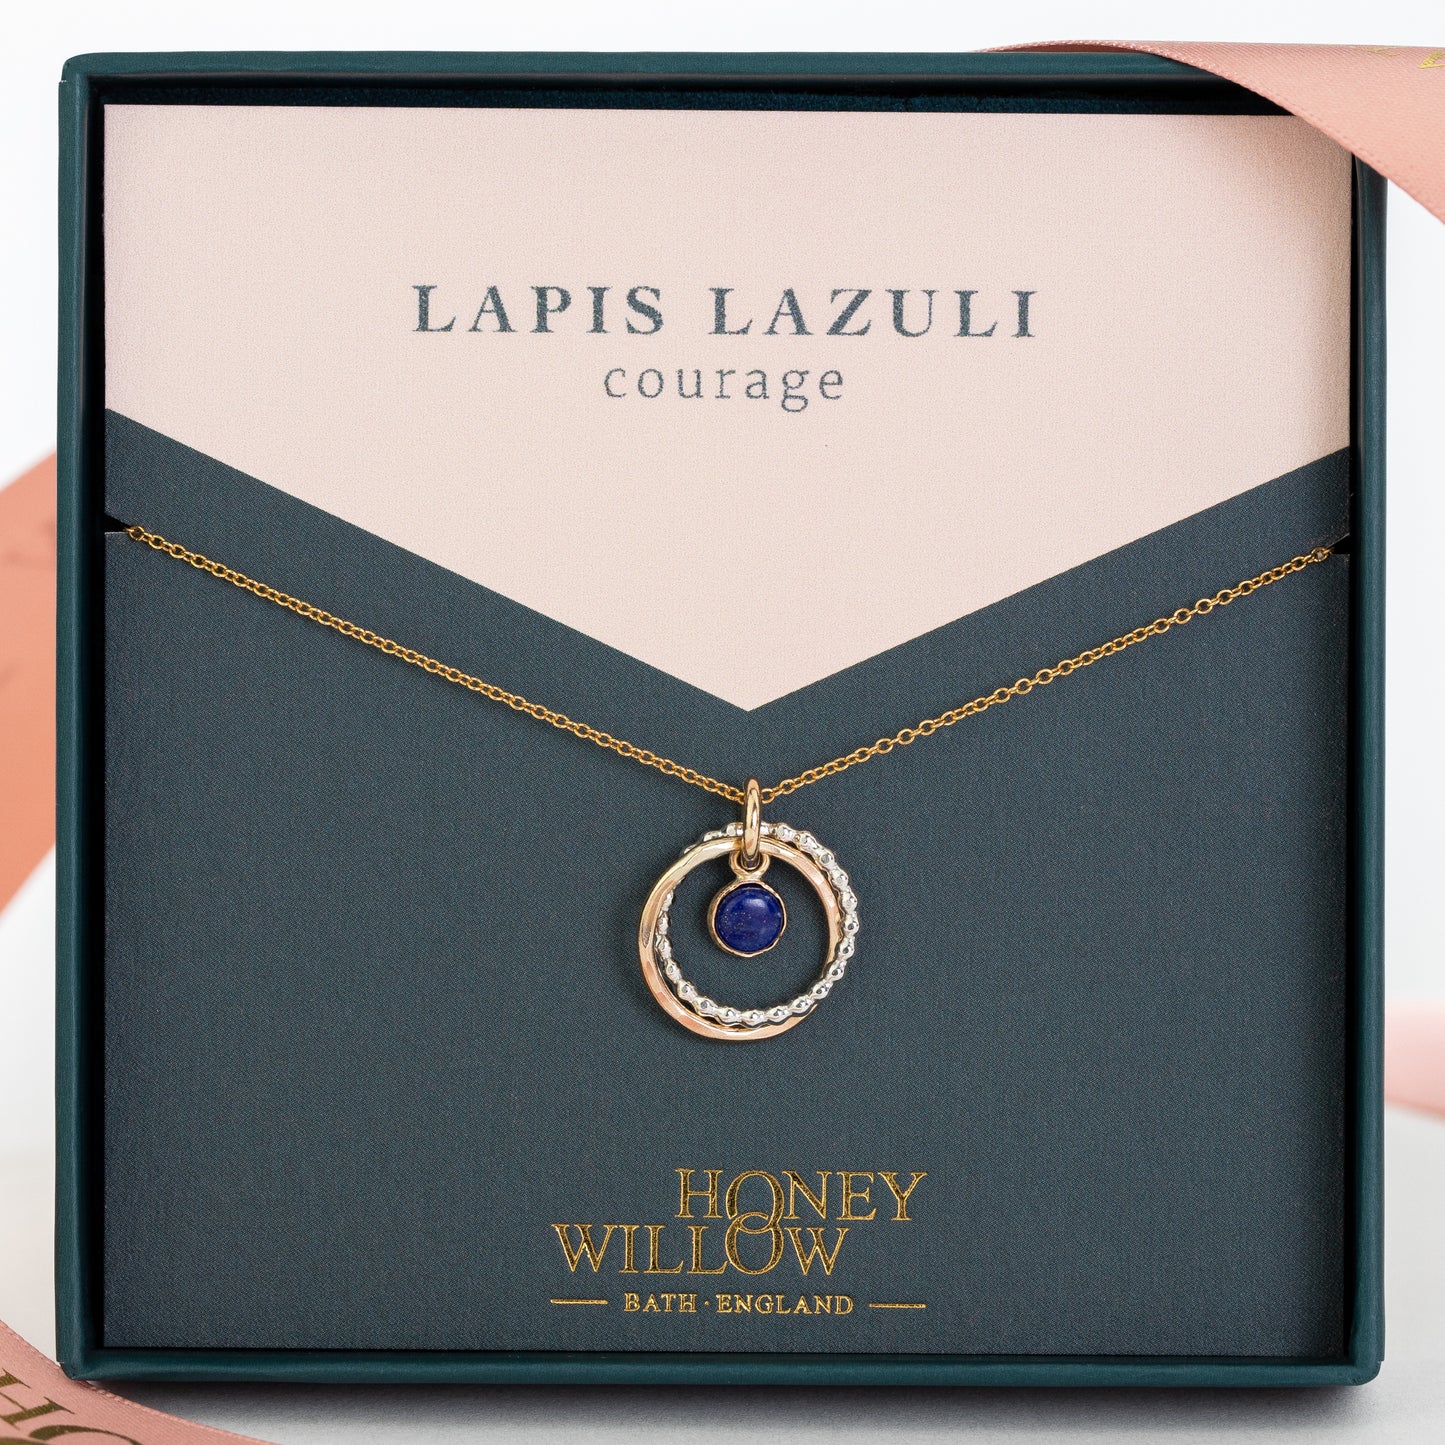 Lapis Lazuli Necklace - Courage - Silver & Gold